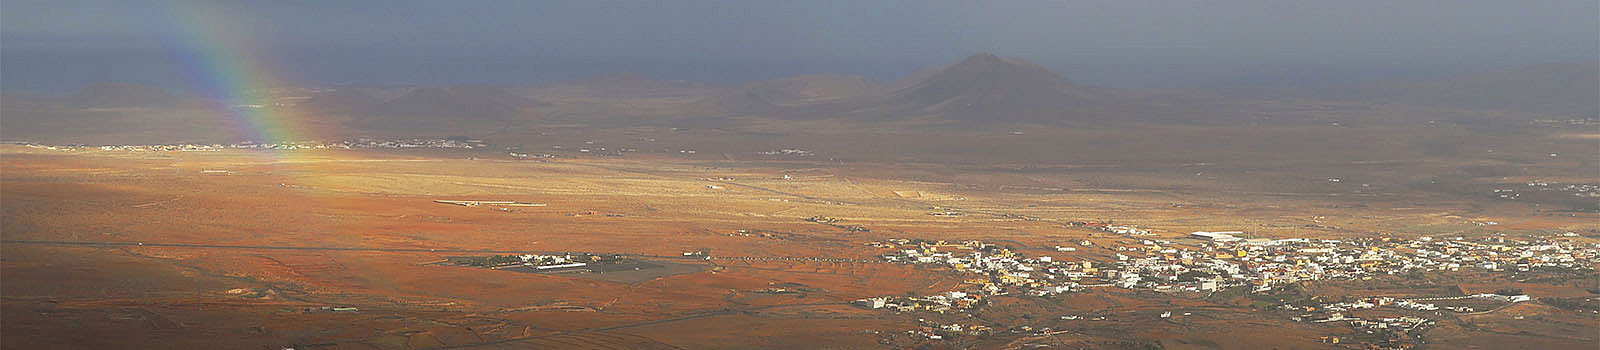 Die alte Hauptstadt Antigua Fuerteventura.